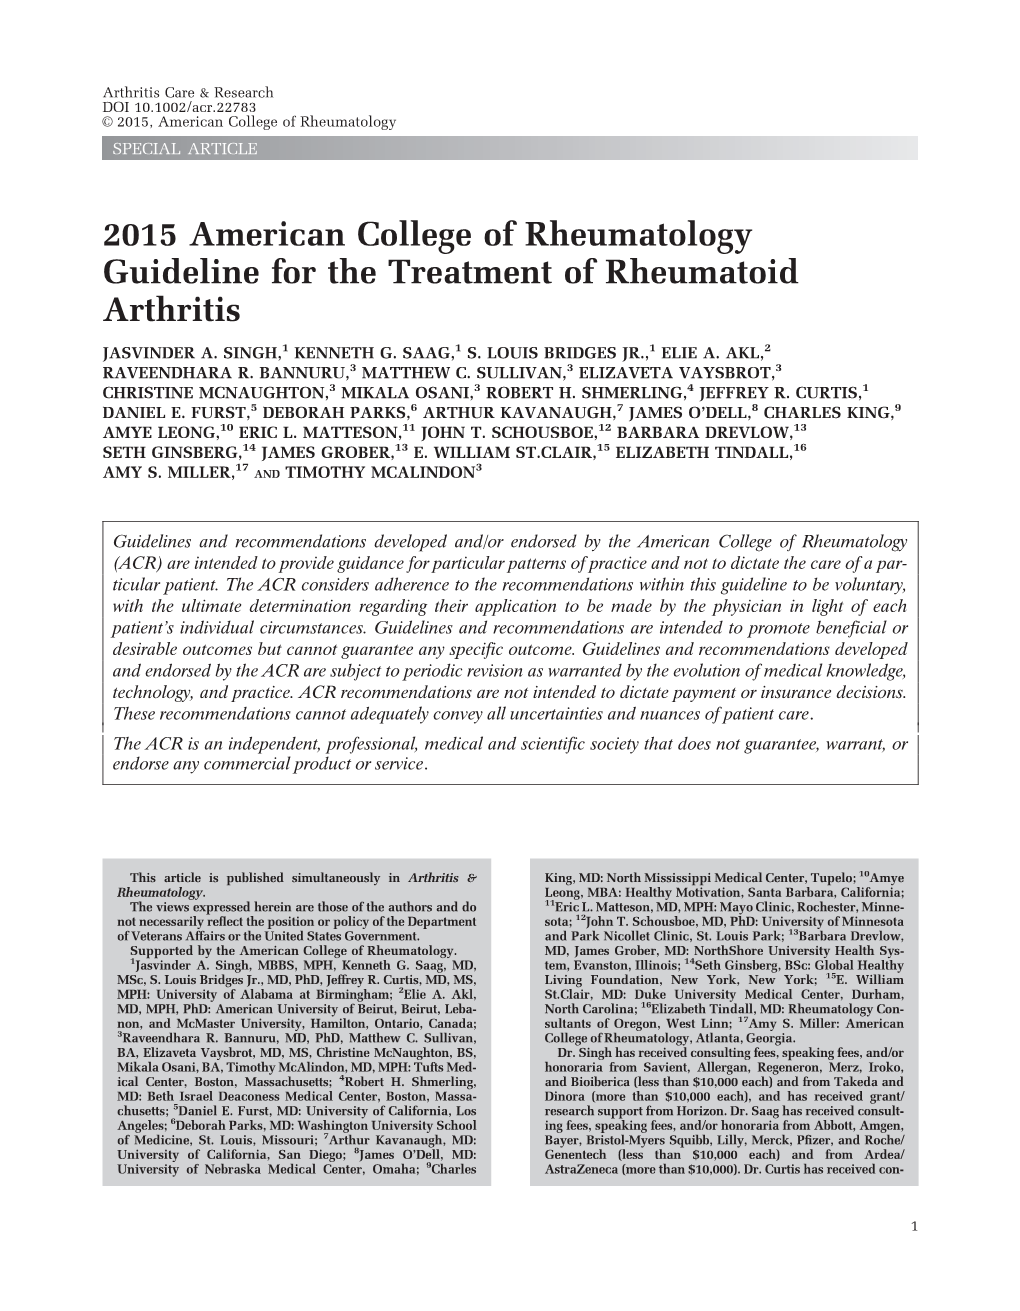 2015 American College of Rheumatology Guideline for the Treatment of Rheumatoid Arthritis